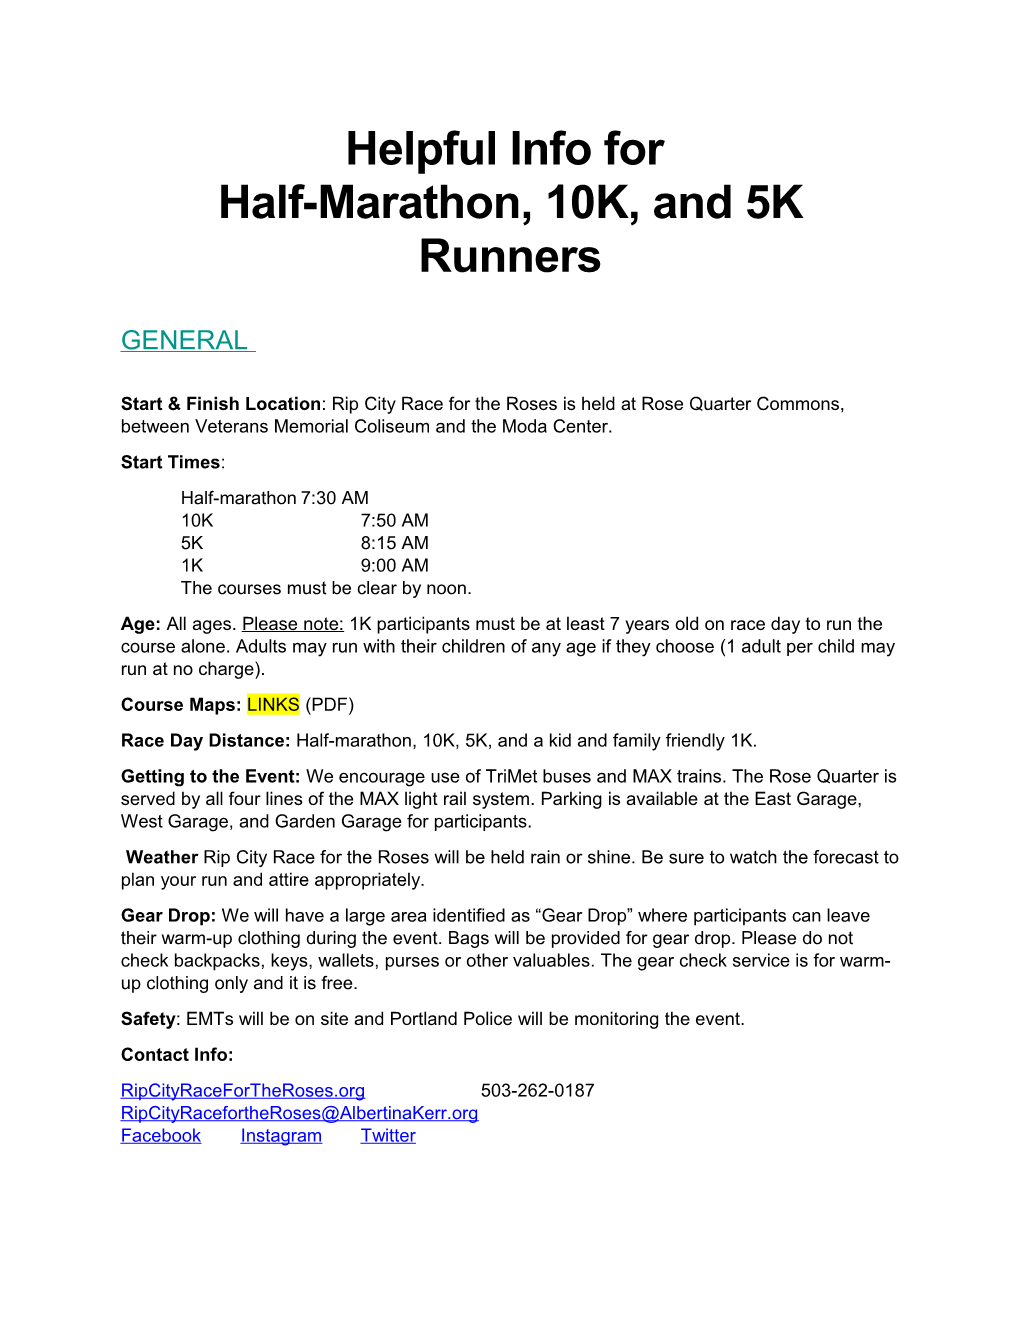 Helpful Info for Half-Marathon, 10K, and 5K Runners